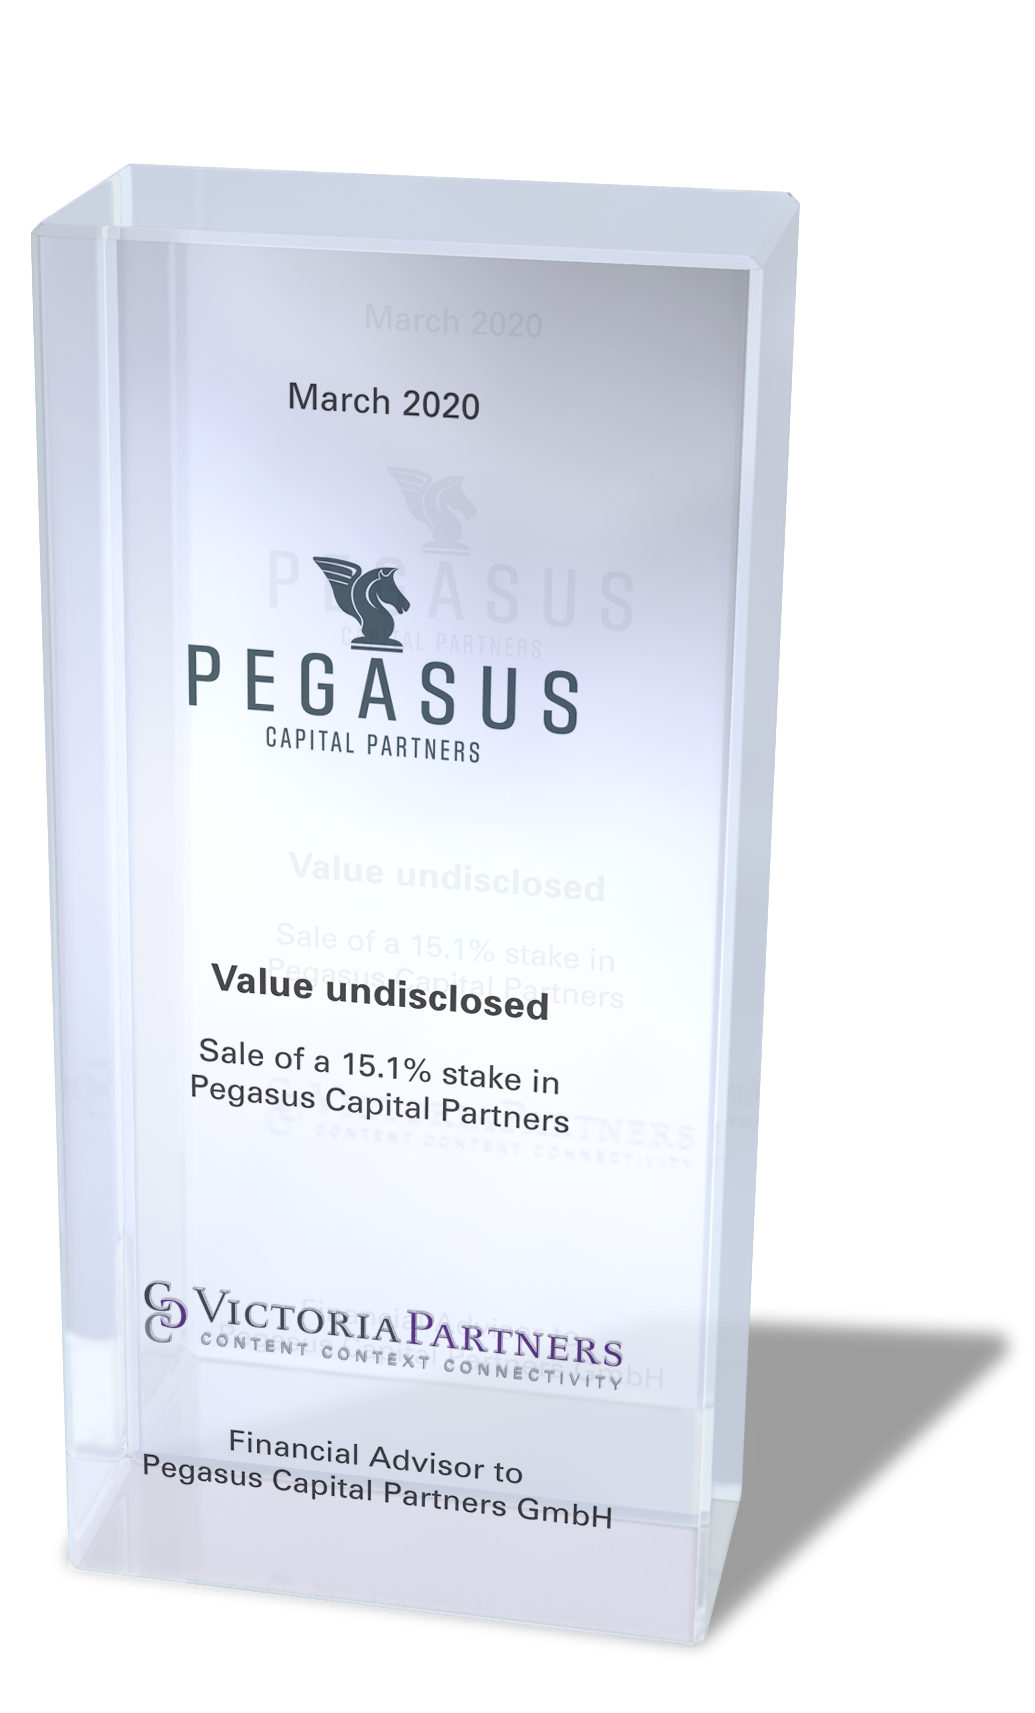 VICTORIAPARTNERS - Financial Advisor to Pegasus Capital Partners GmbH - March 2020